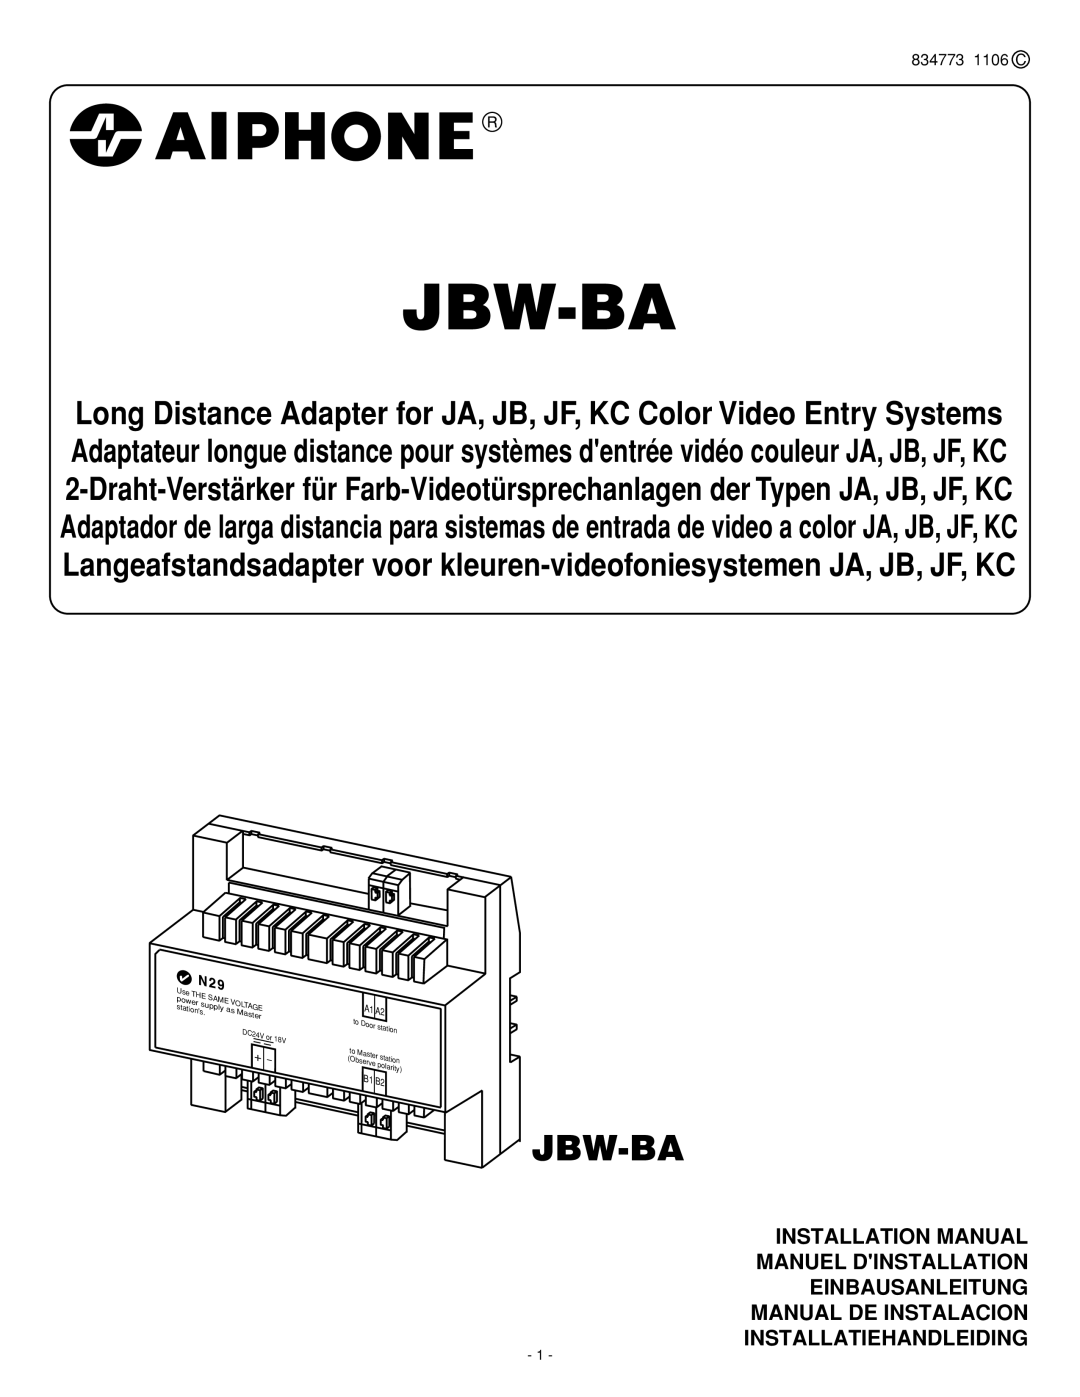 Aiphone JBW-BA installation manual Jbw-Ba 